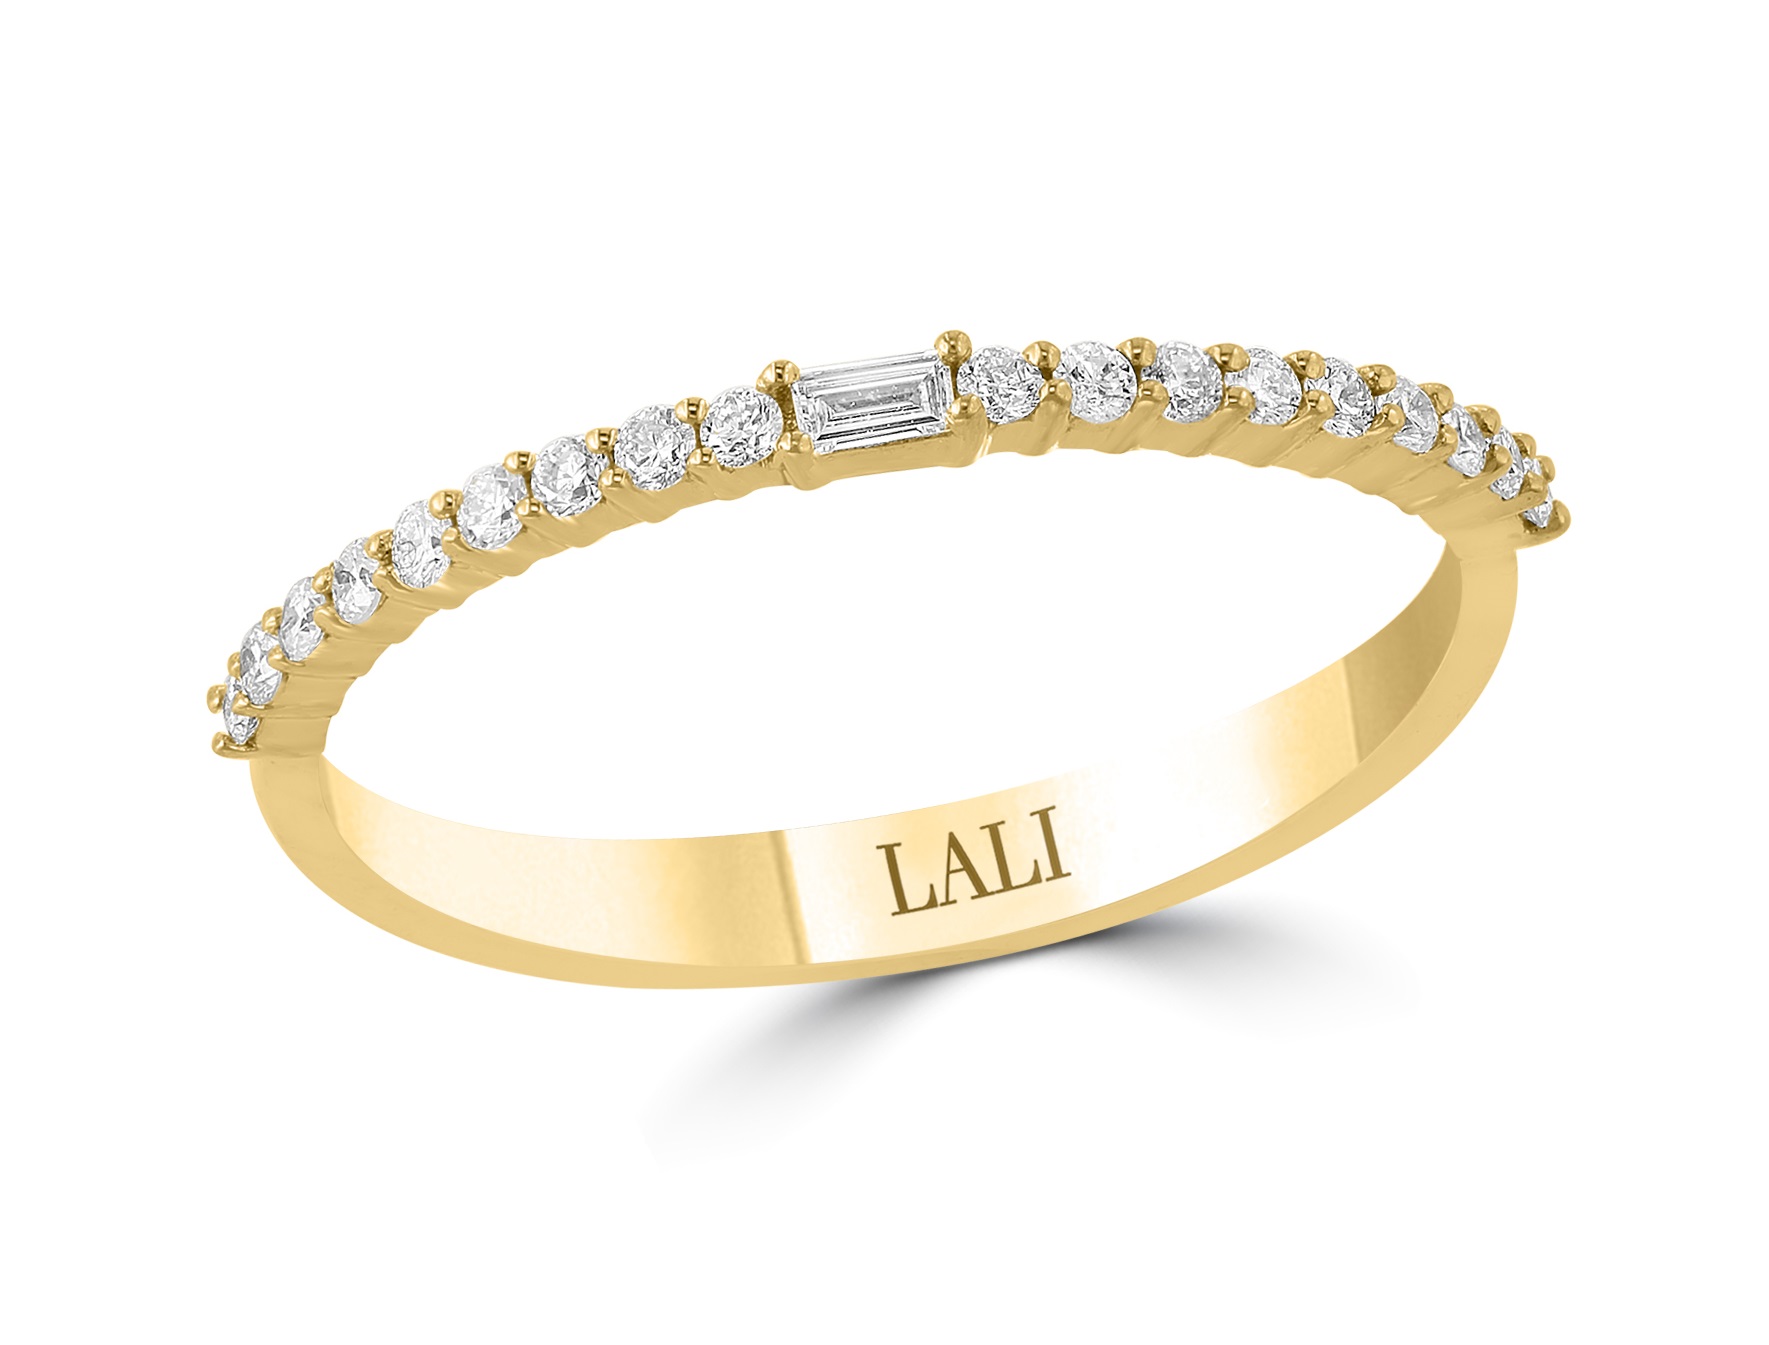 Lali 14 karat yellow gold diamond full cut and baguette ring